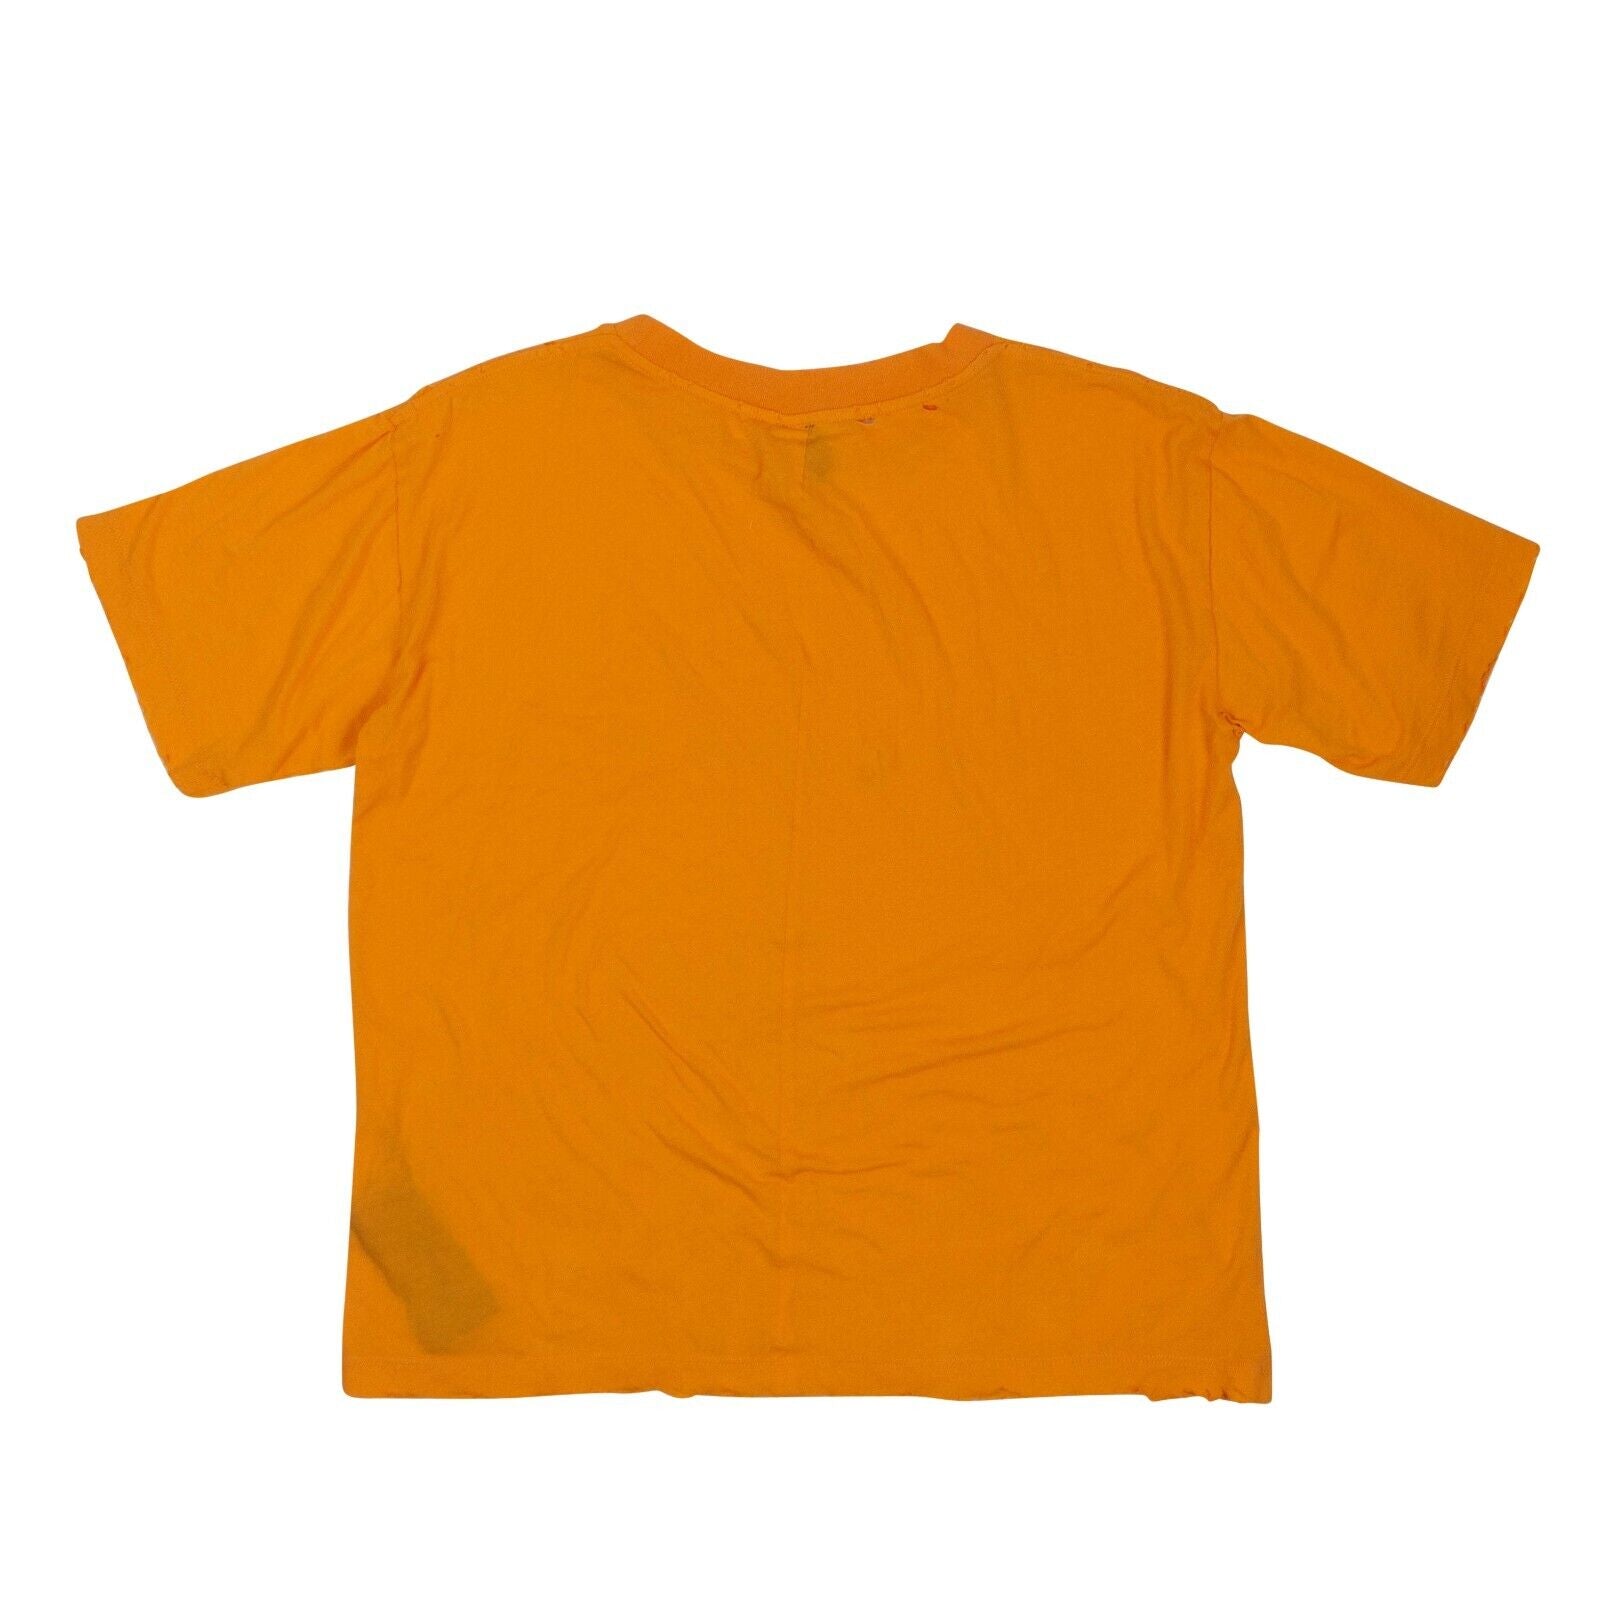 Unravel Project Short Sleeve Jersey Skate T-Shirt - Orange